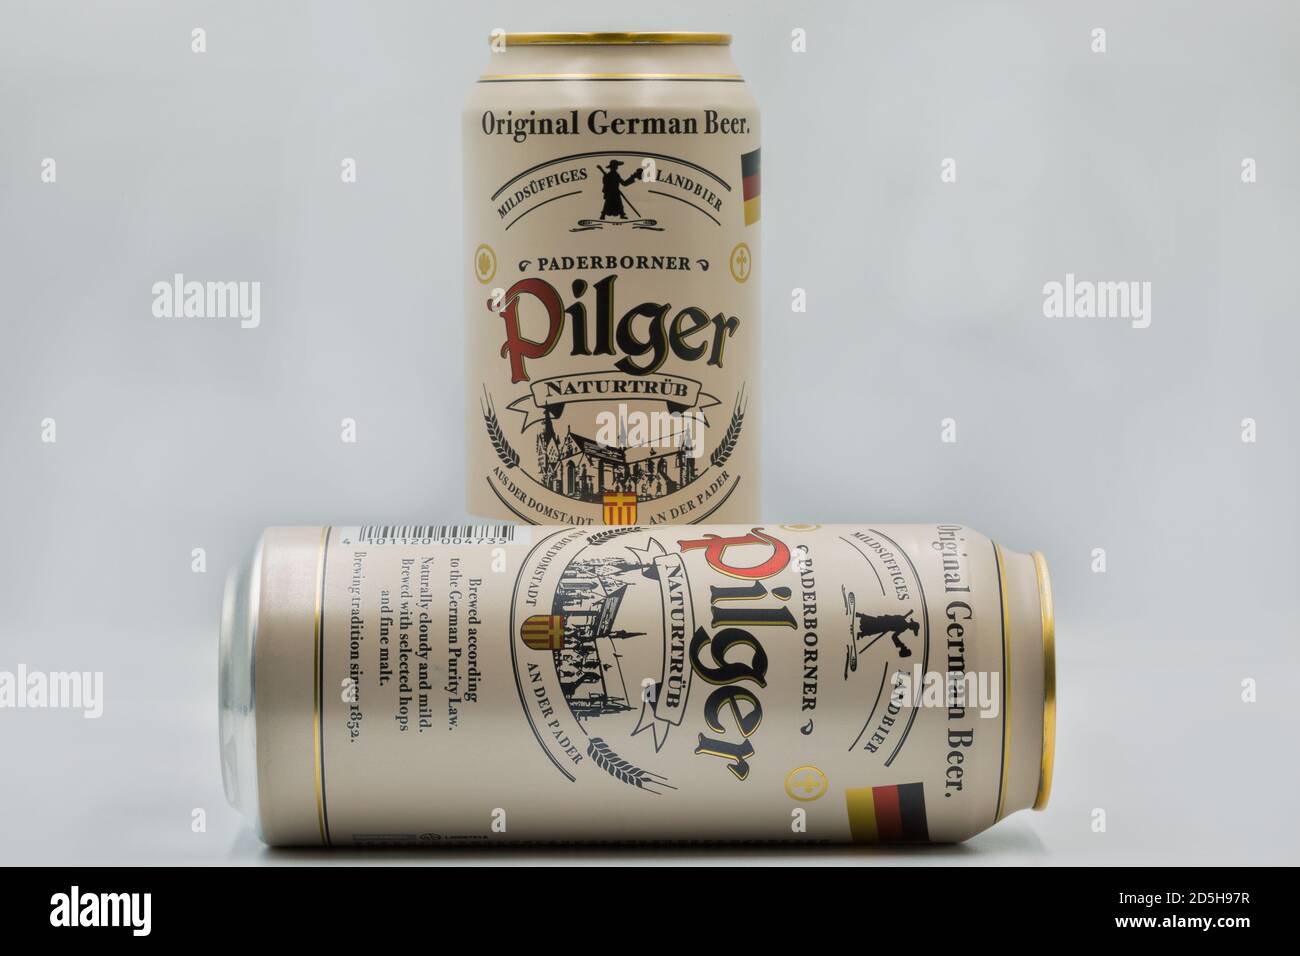 KYIV, UKRAINE - AUGUST 22, 2020: Raderborner Pilger original German beer cans closeup against white background. Stock Photo